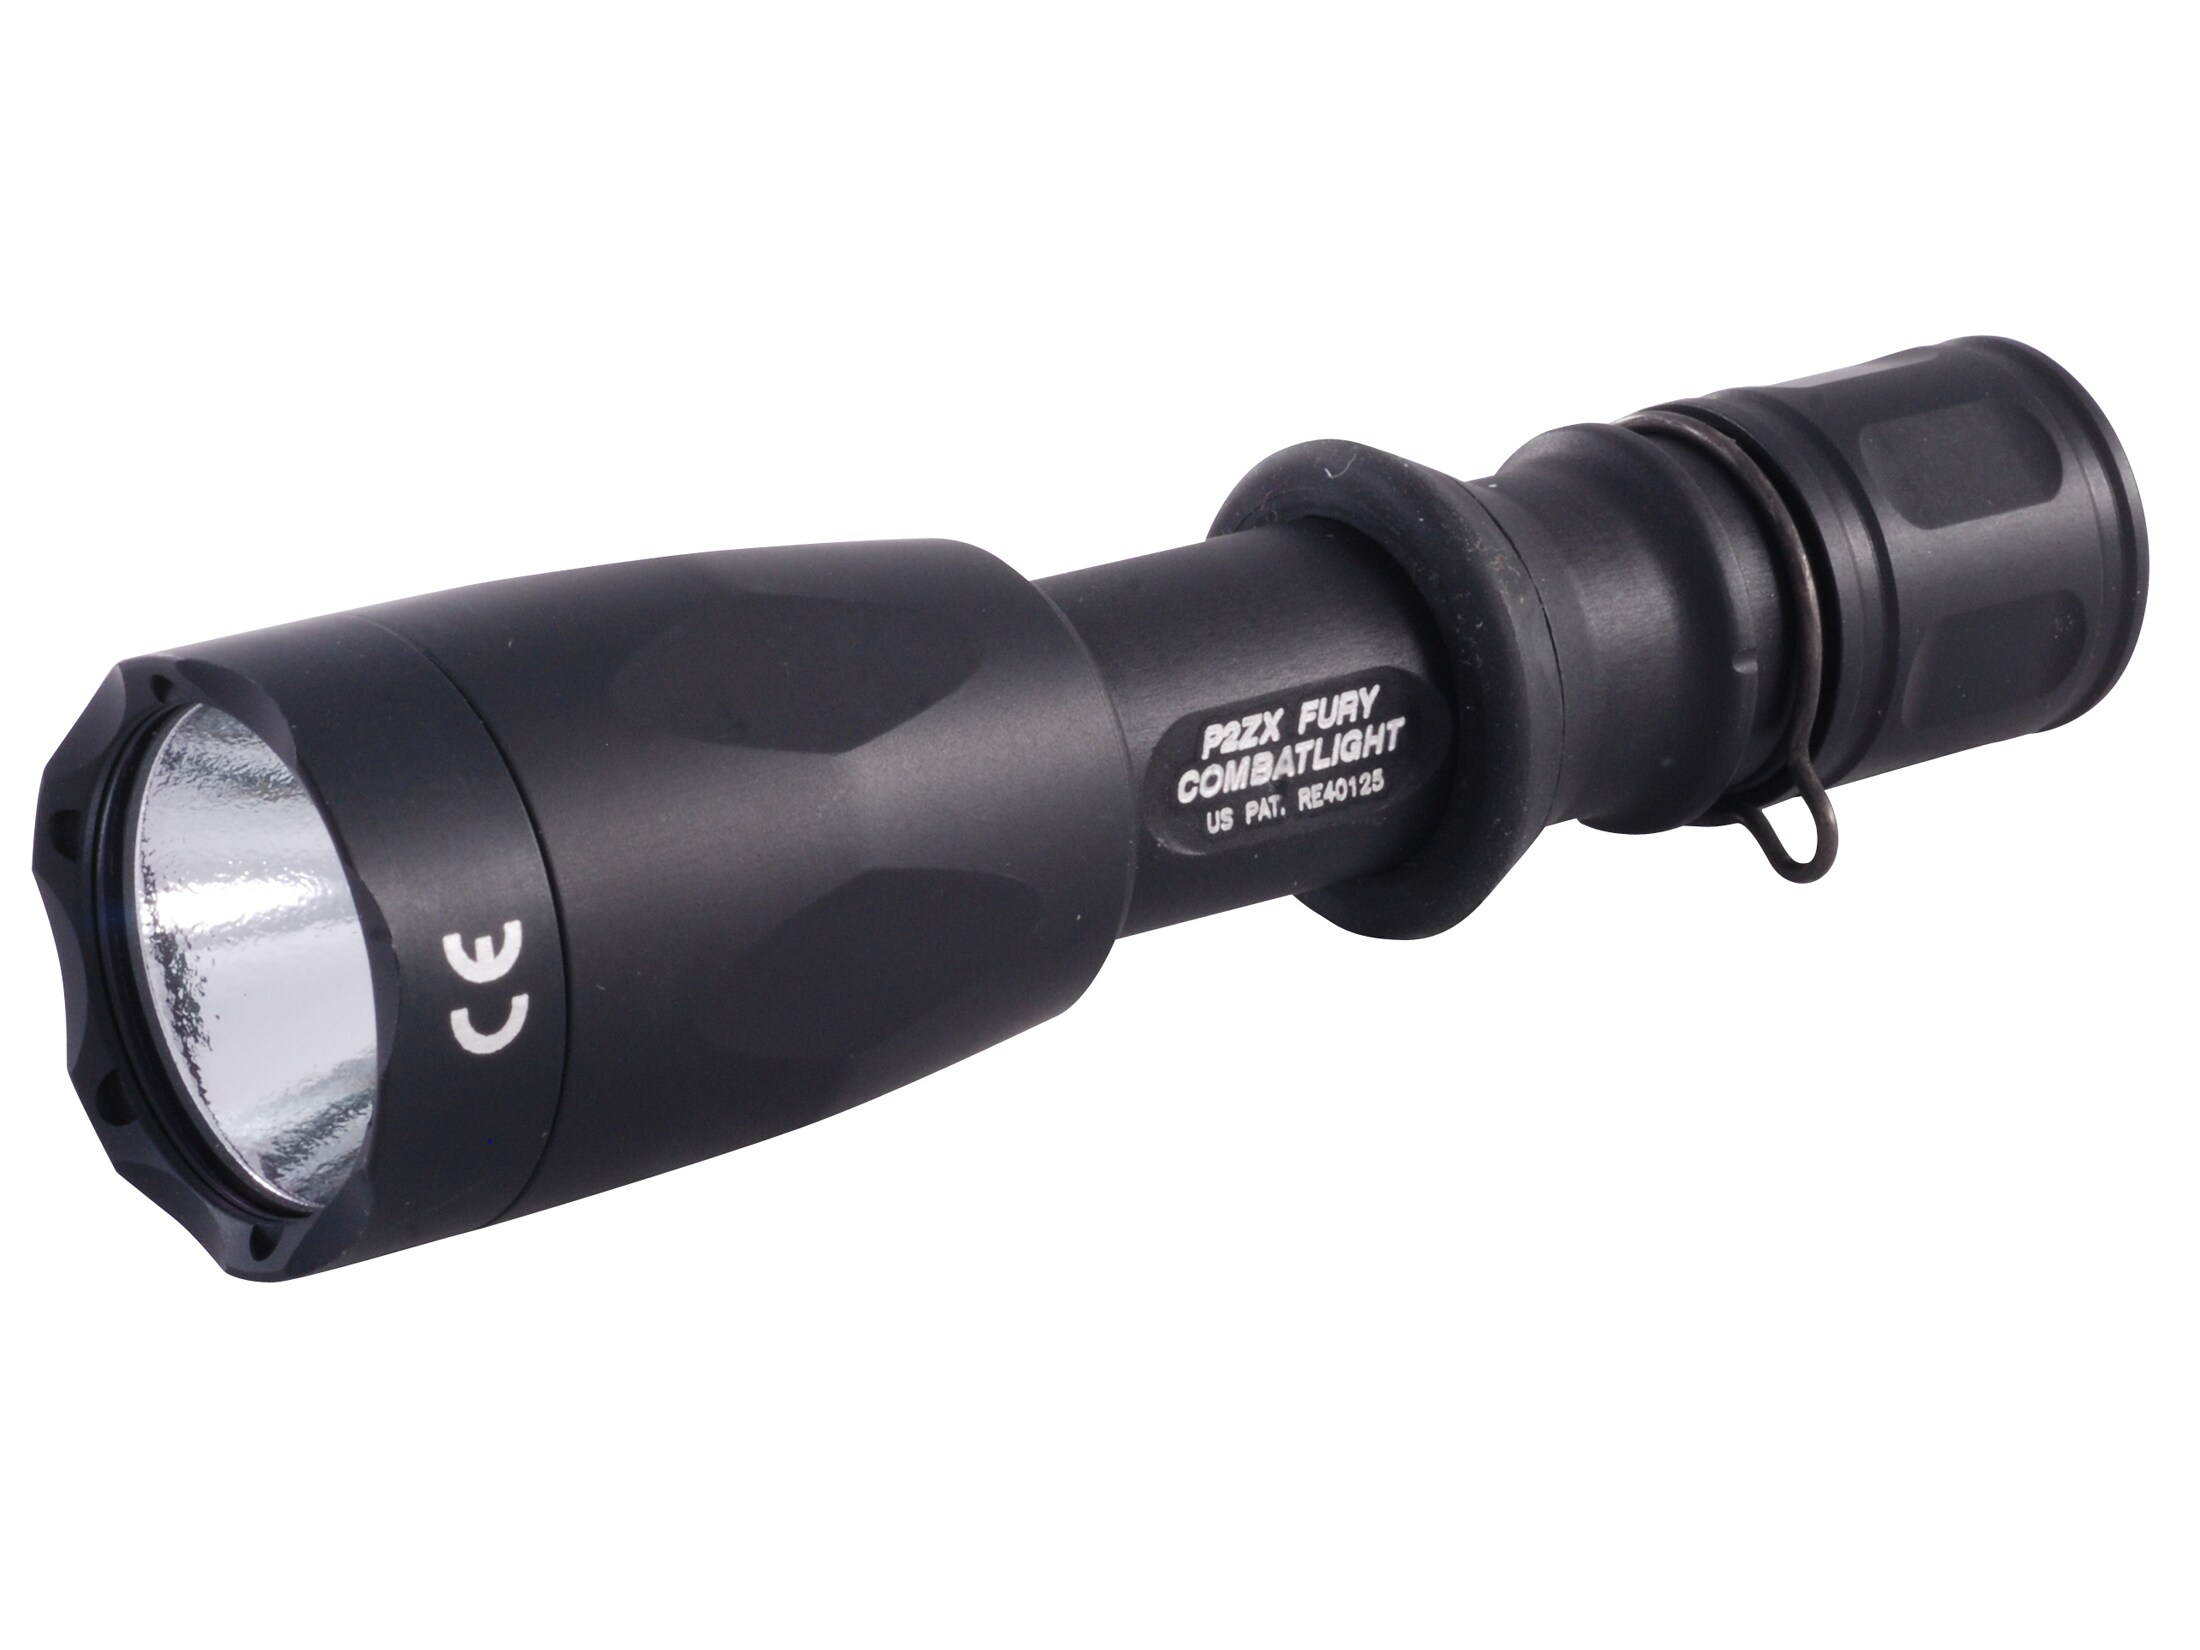 Surefire P2ZX Fury CombatLight Flashlight LED 2 CR123A Batteries